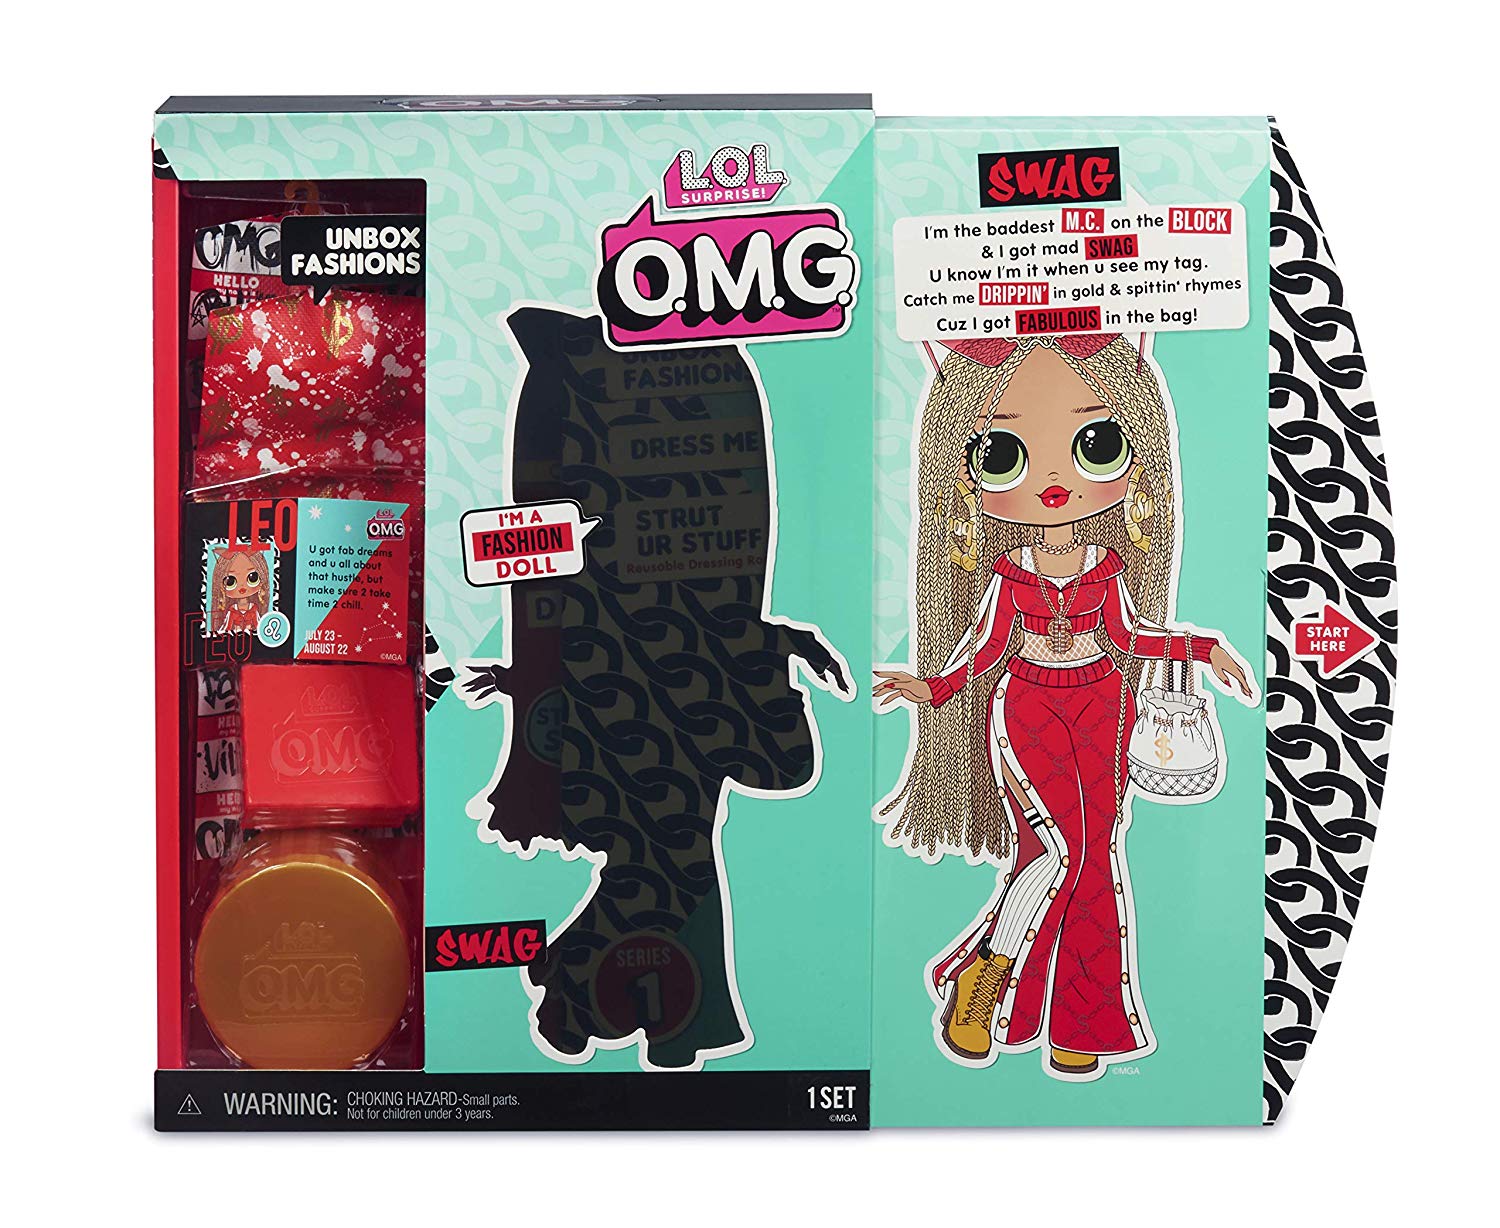 Lol Surprise top secret O.M.G. Swag fashion doll